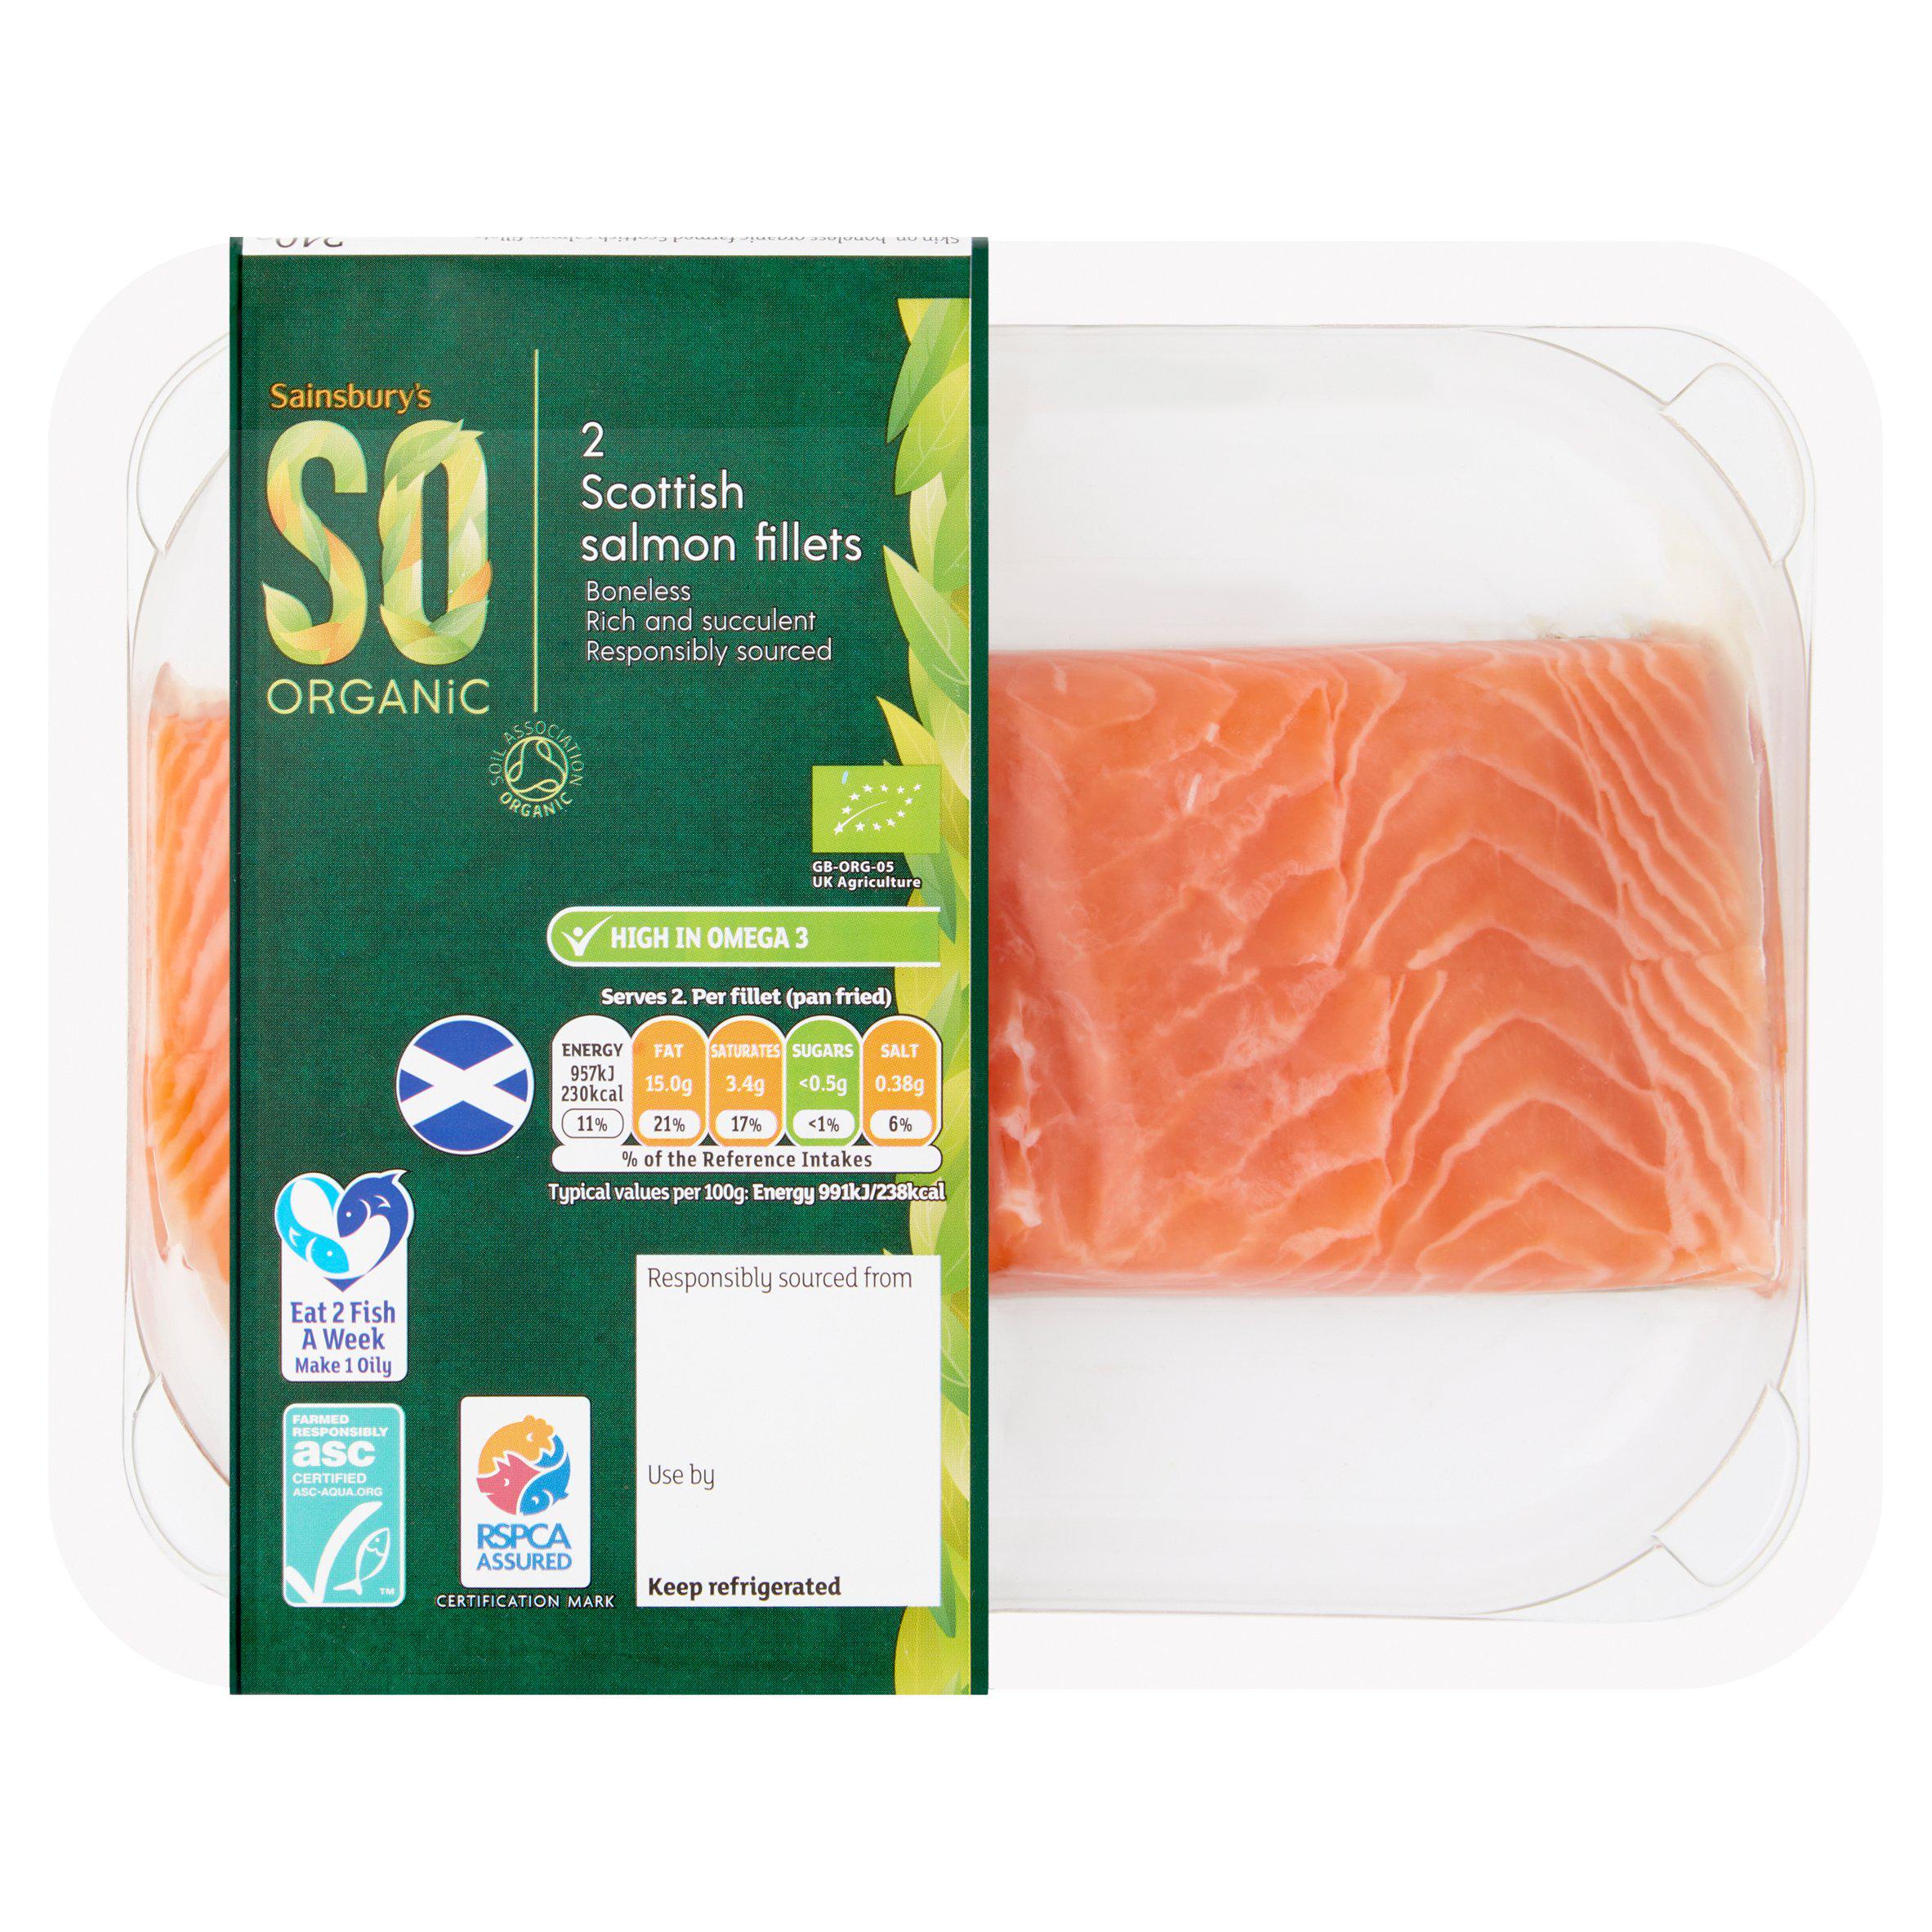 Sainsbury's Skin on ASC Scottish Salmon Fillets, So Organic x2